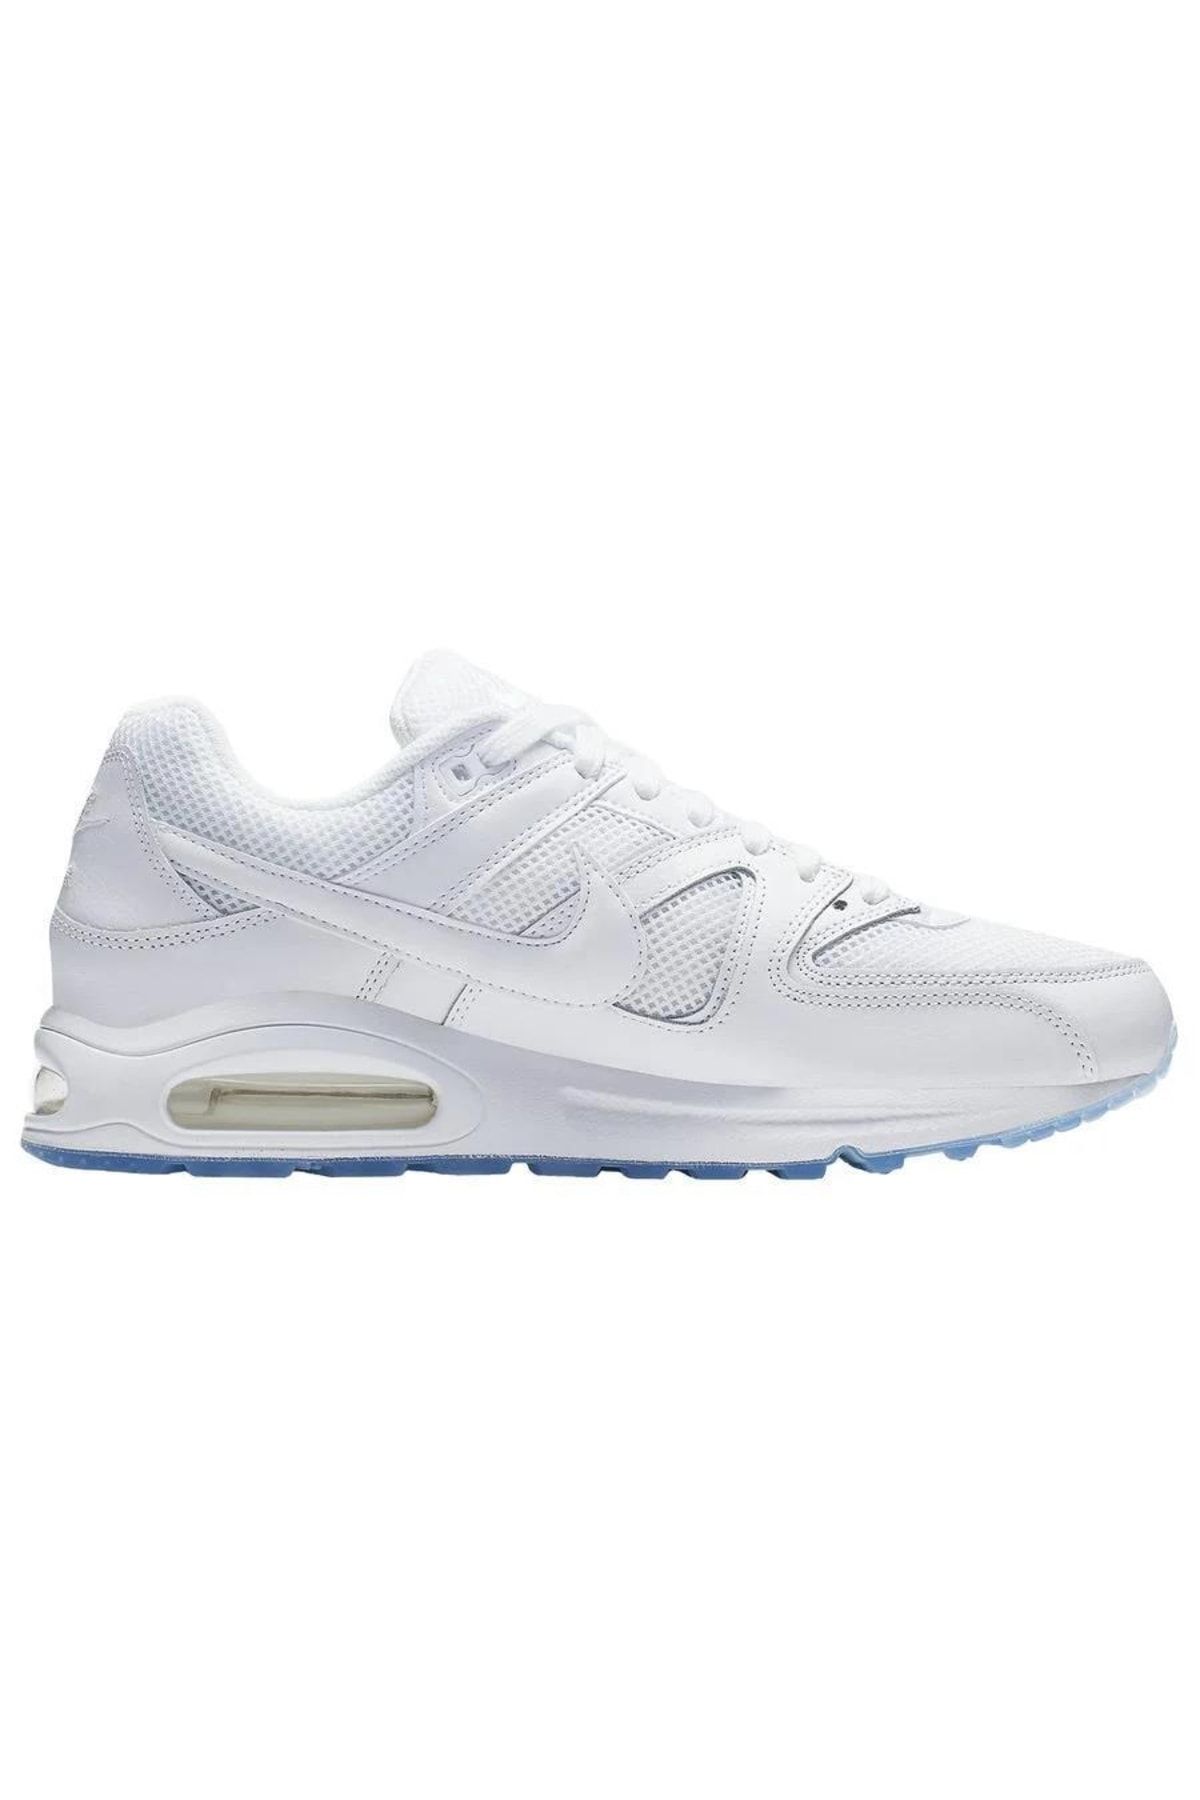 Nike Air Max Command Erkek Spor Ayakkabı White Sneaker 629993-112